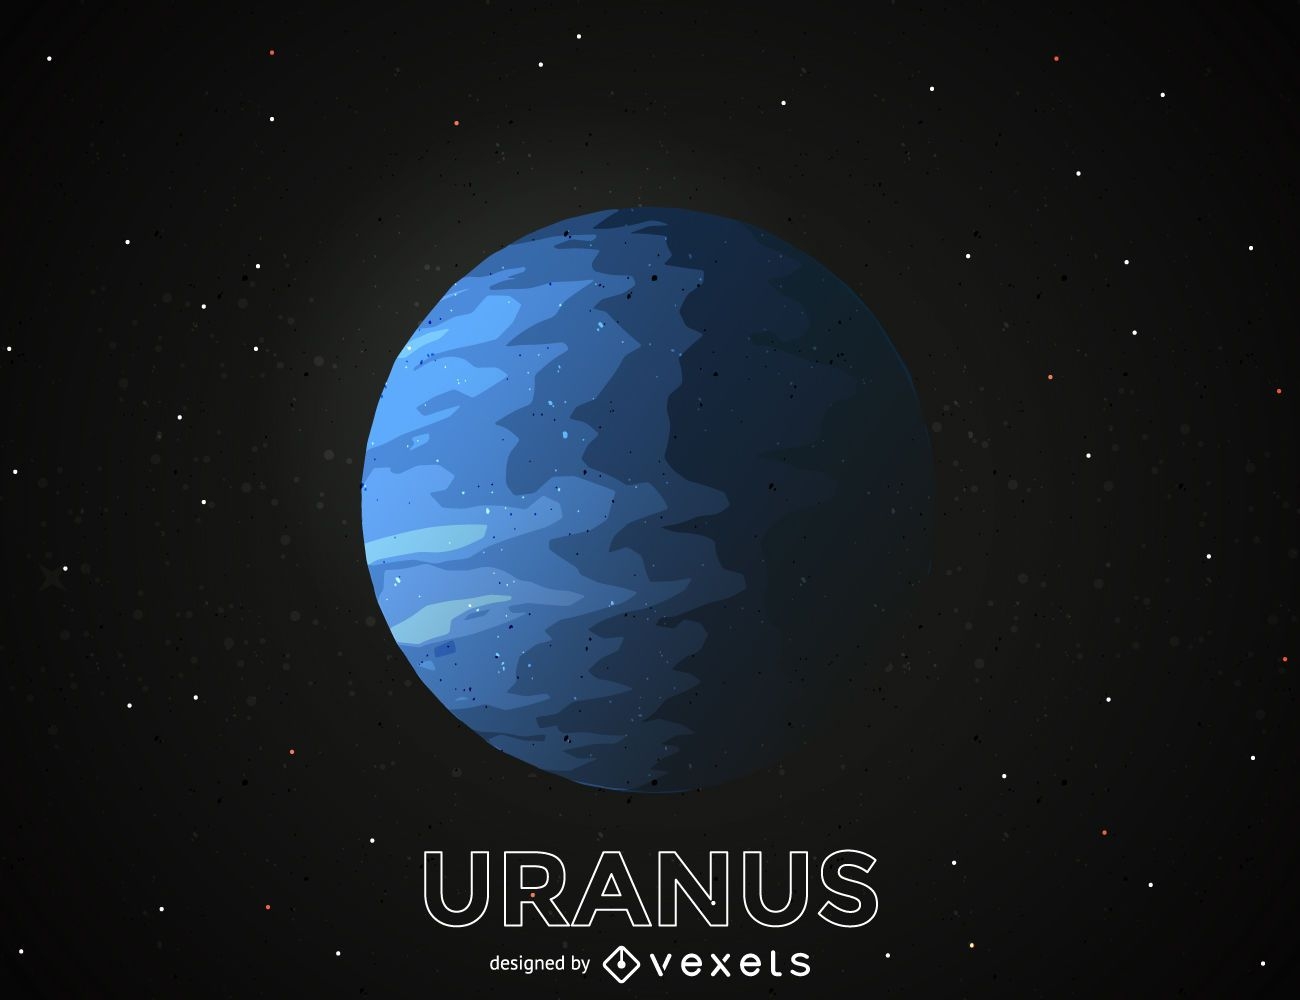 Ilustraci?n del planeta Urano